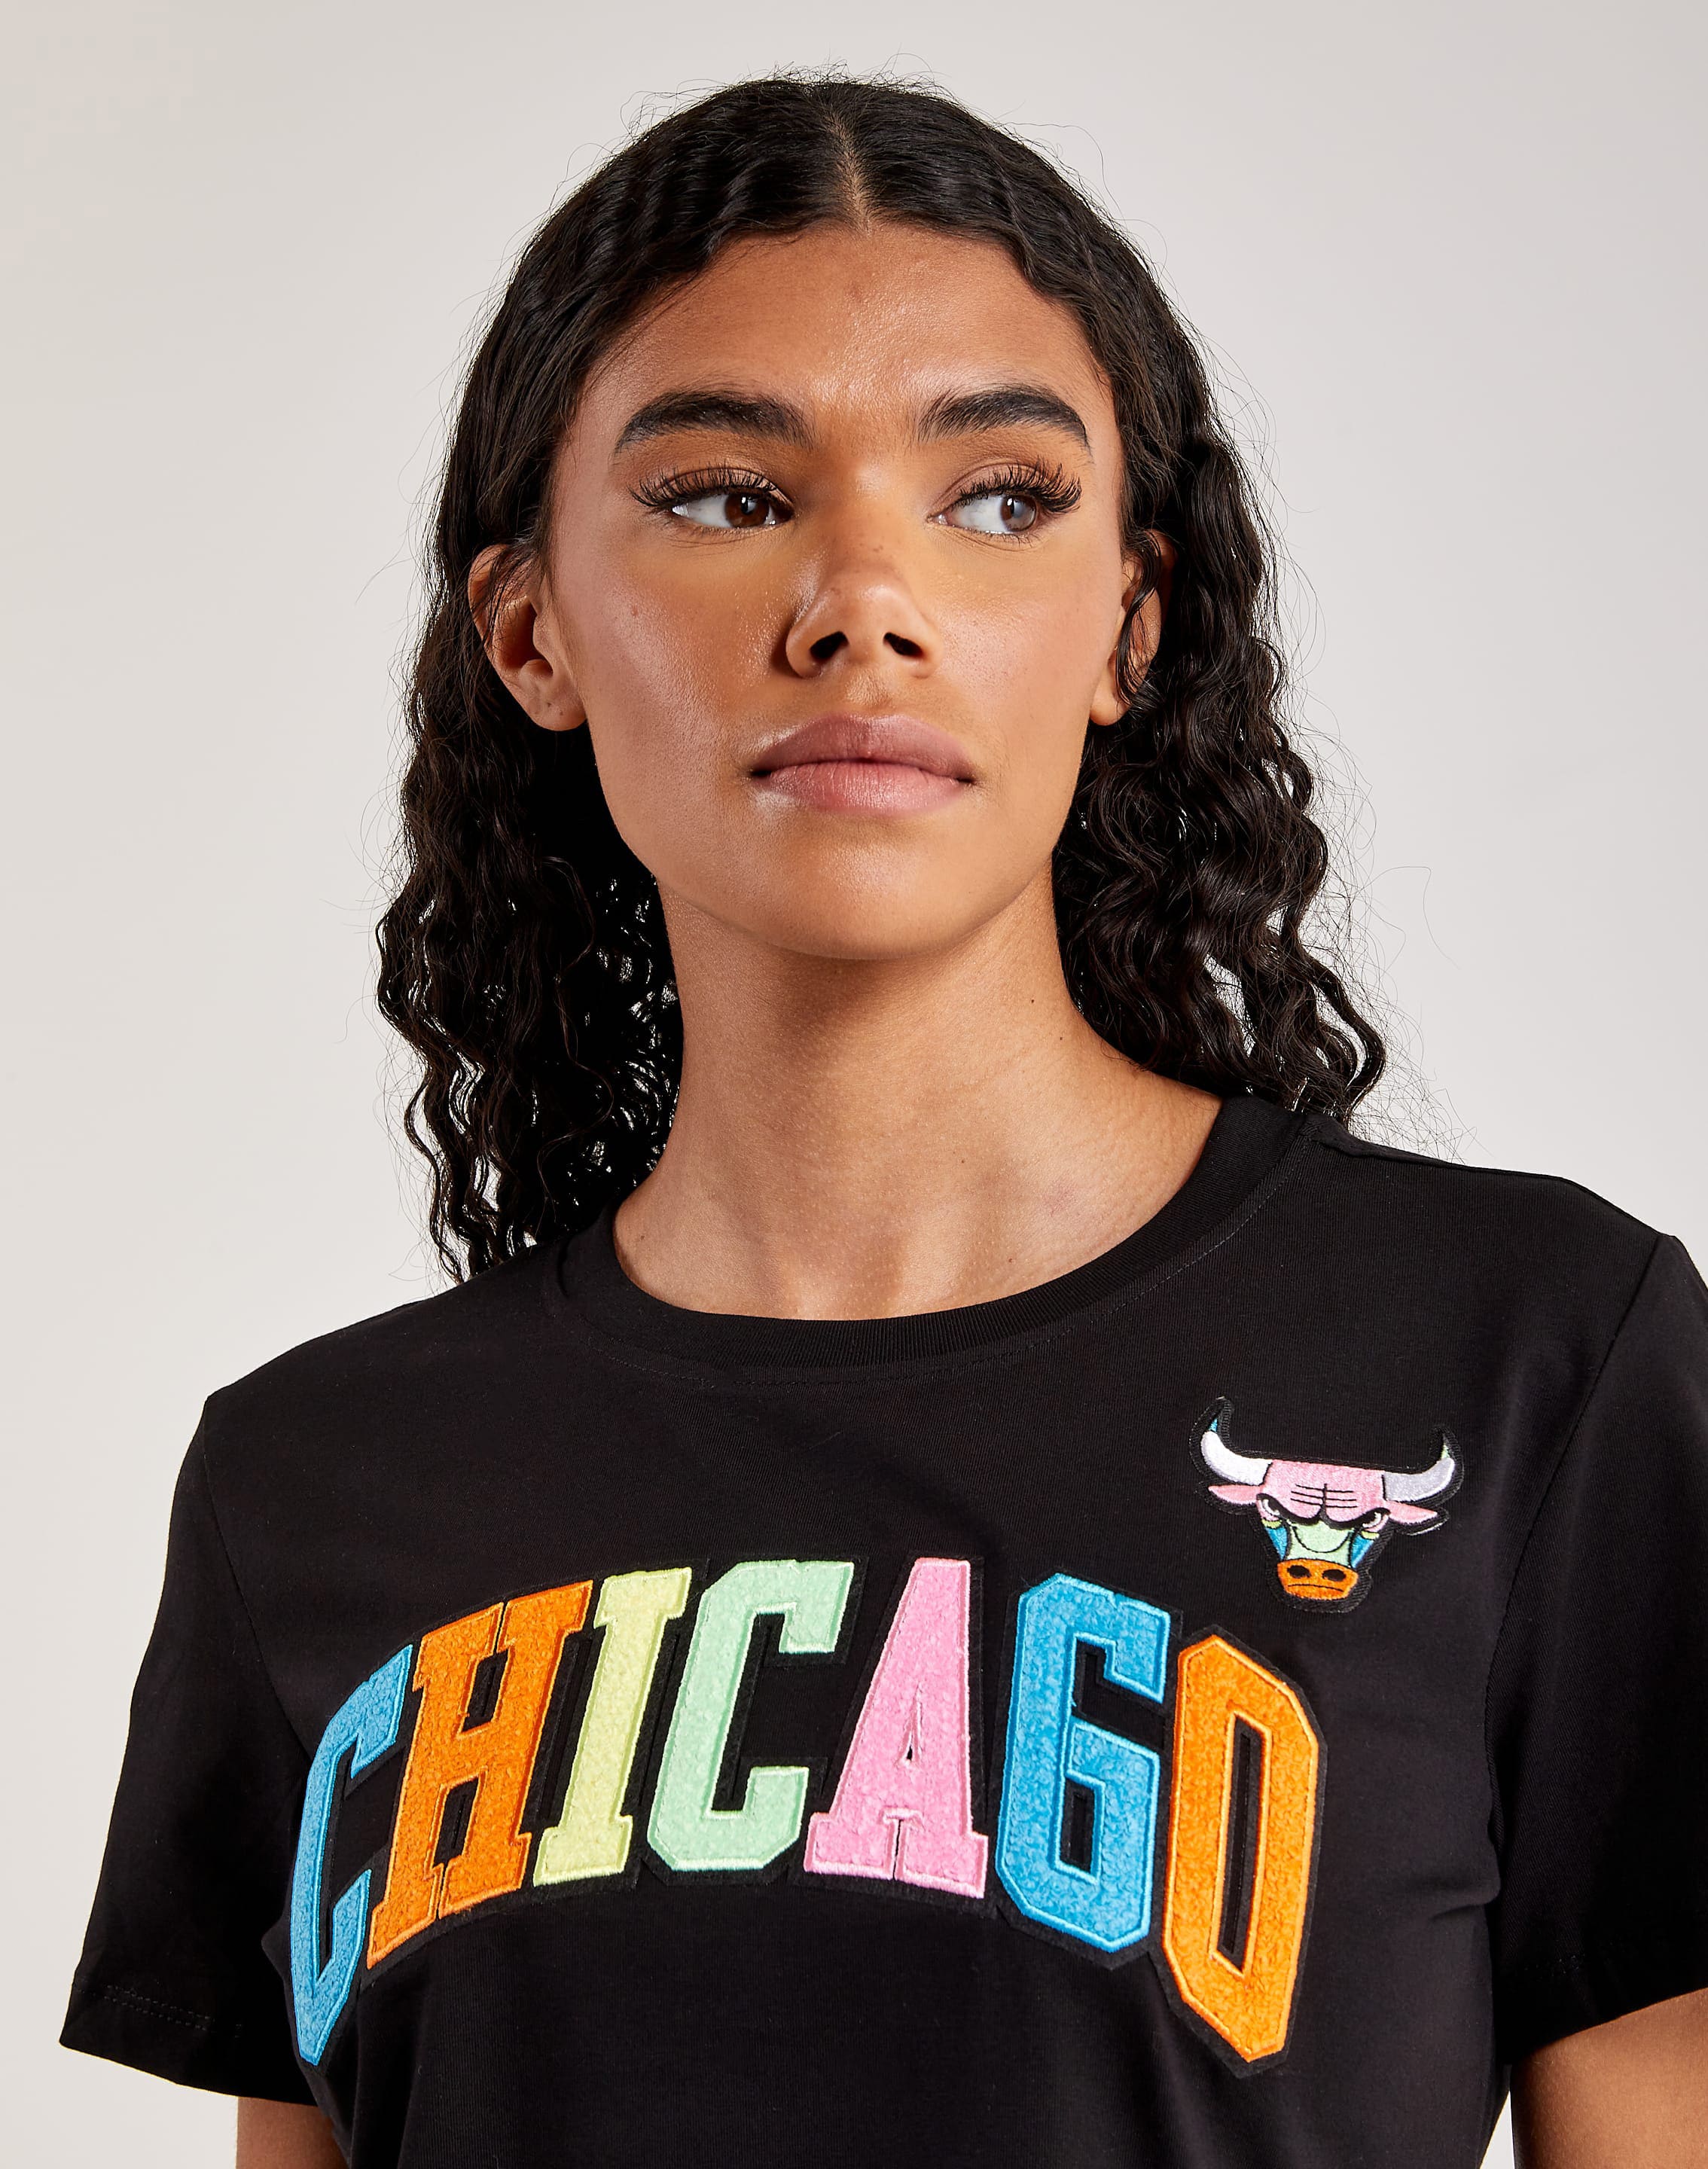 Girls Youth New Era Gray Chicago Bulls Space Dye Jersey V-Neck T-Shirt